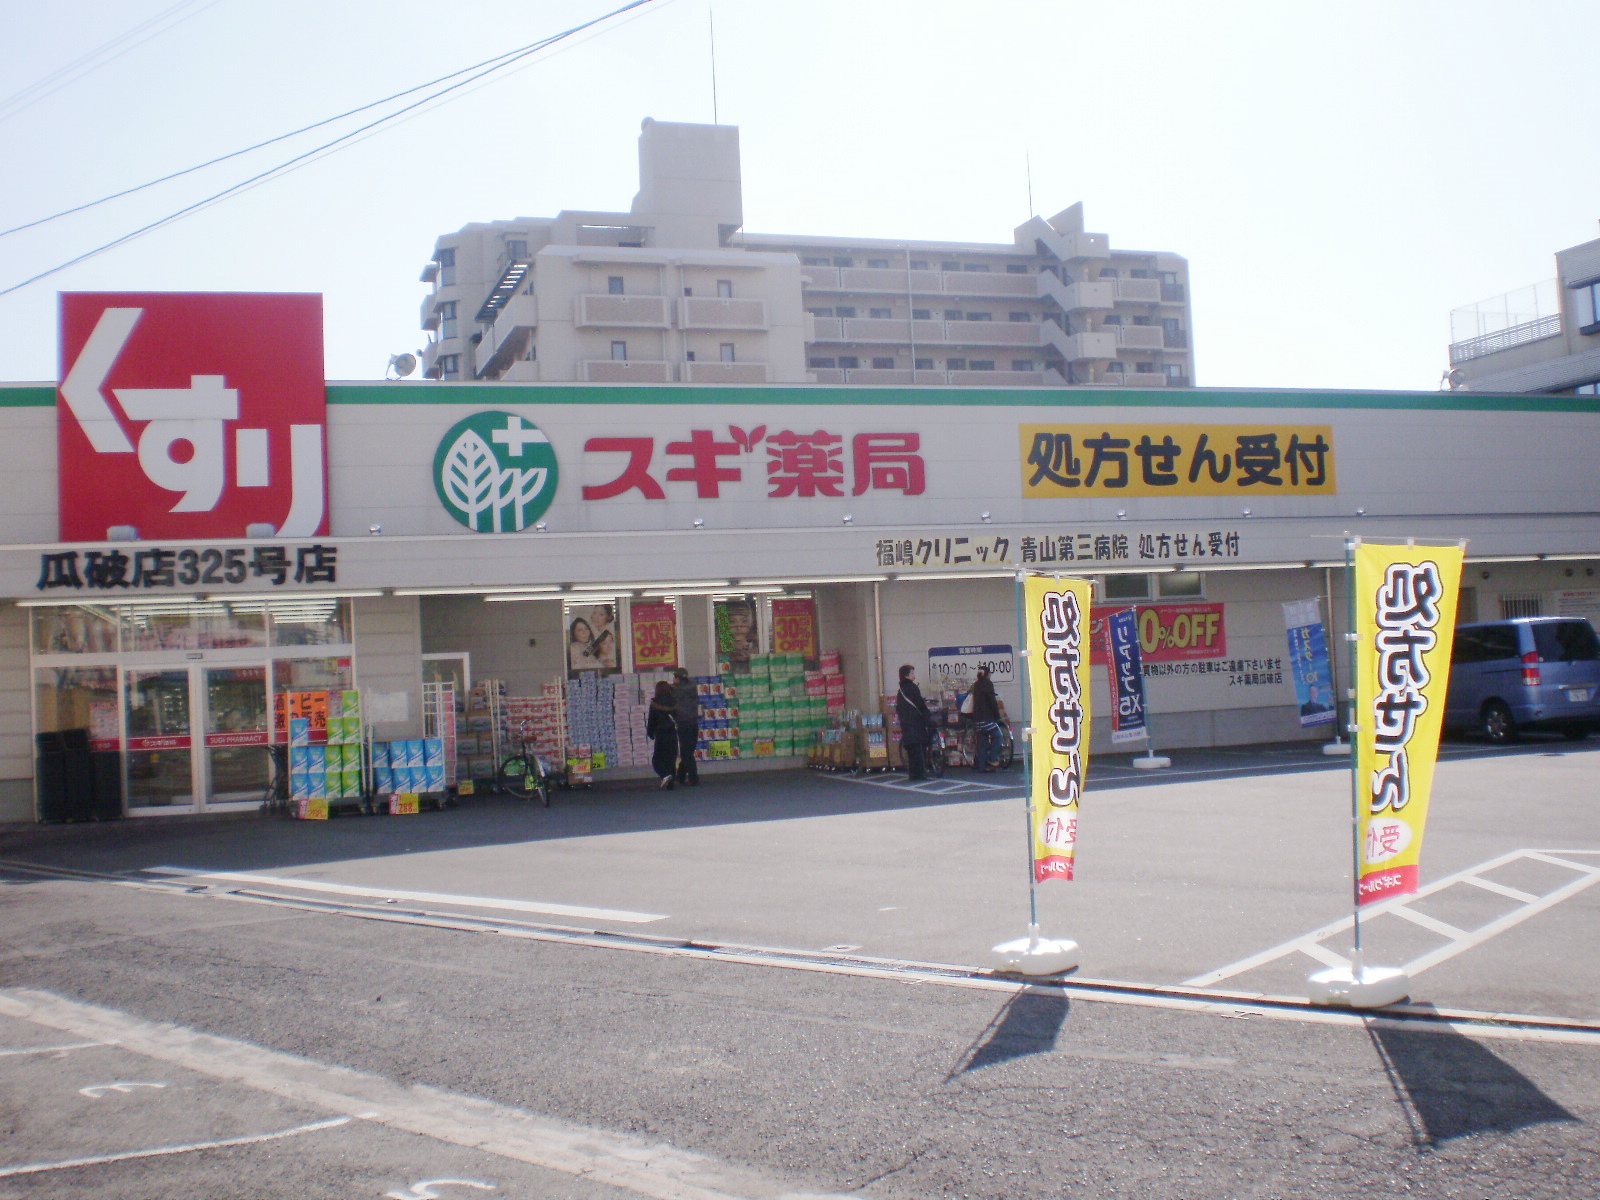 Dorakkusutoa. Cedar pharmacy Uriwari shop 770m until (drugstore)